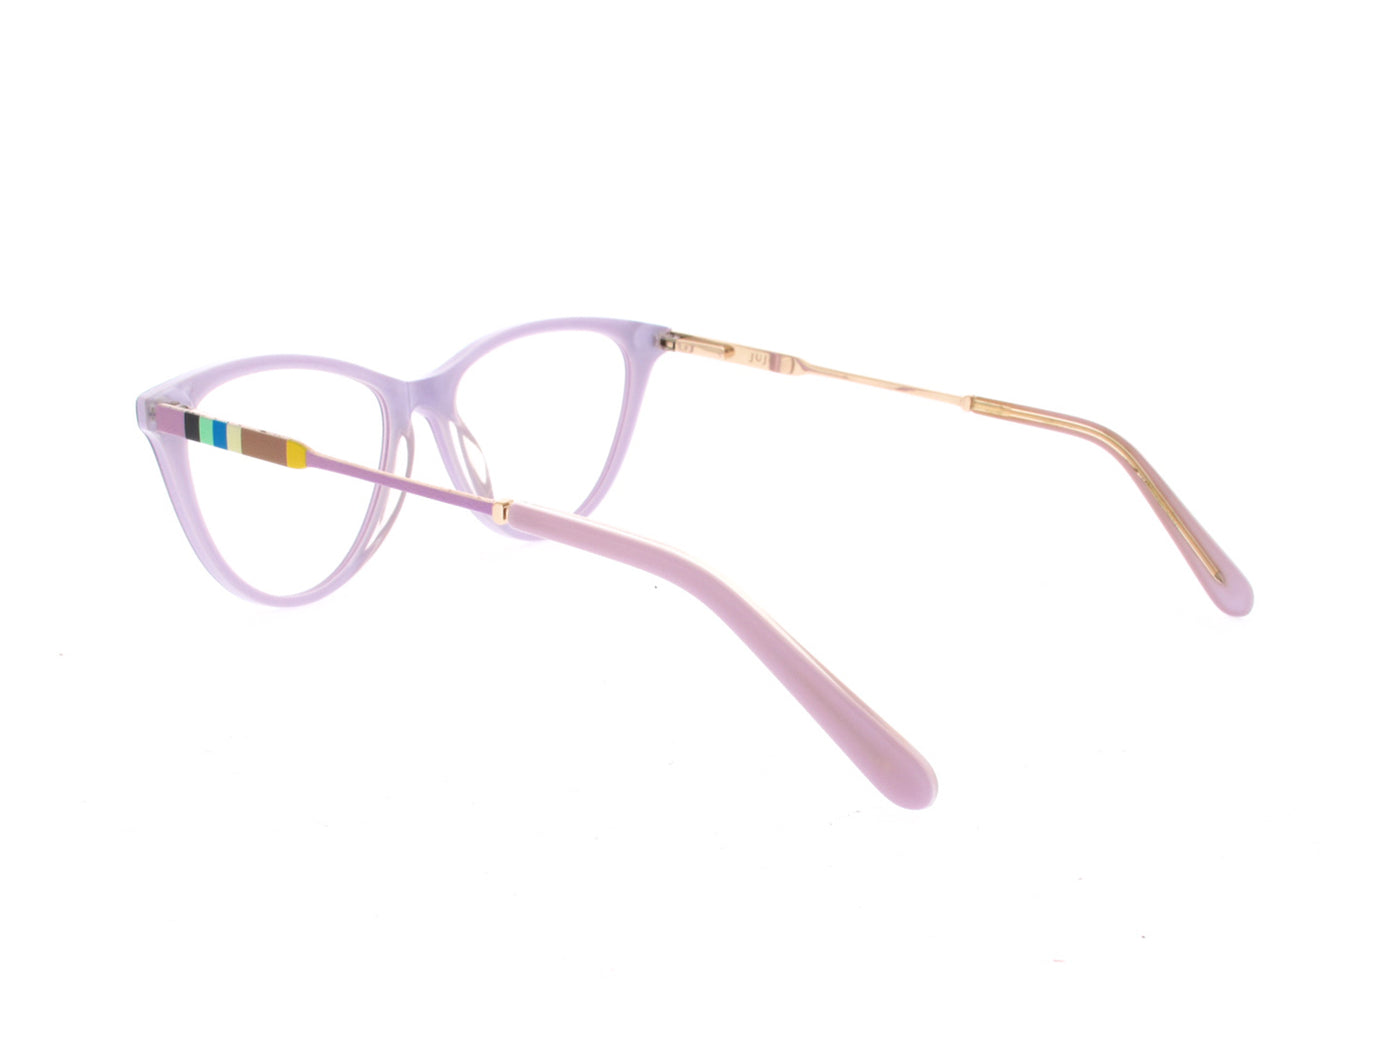 Cateye Glasses 598520